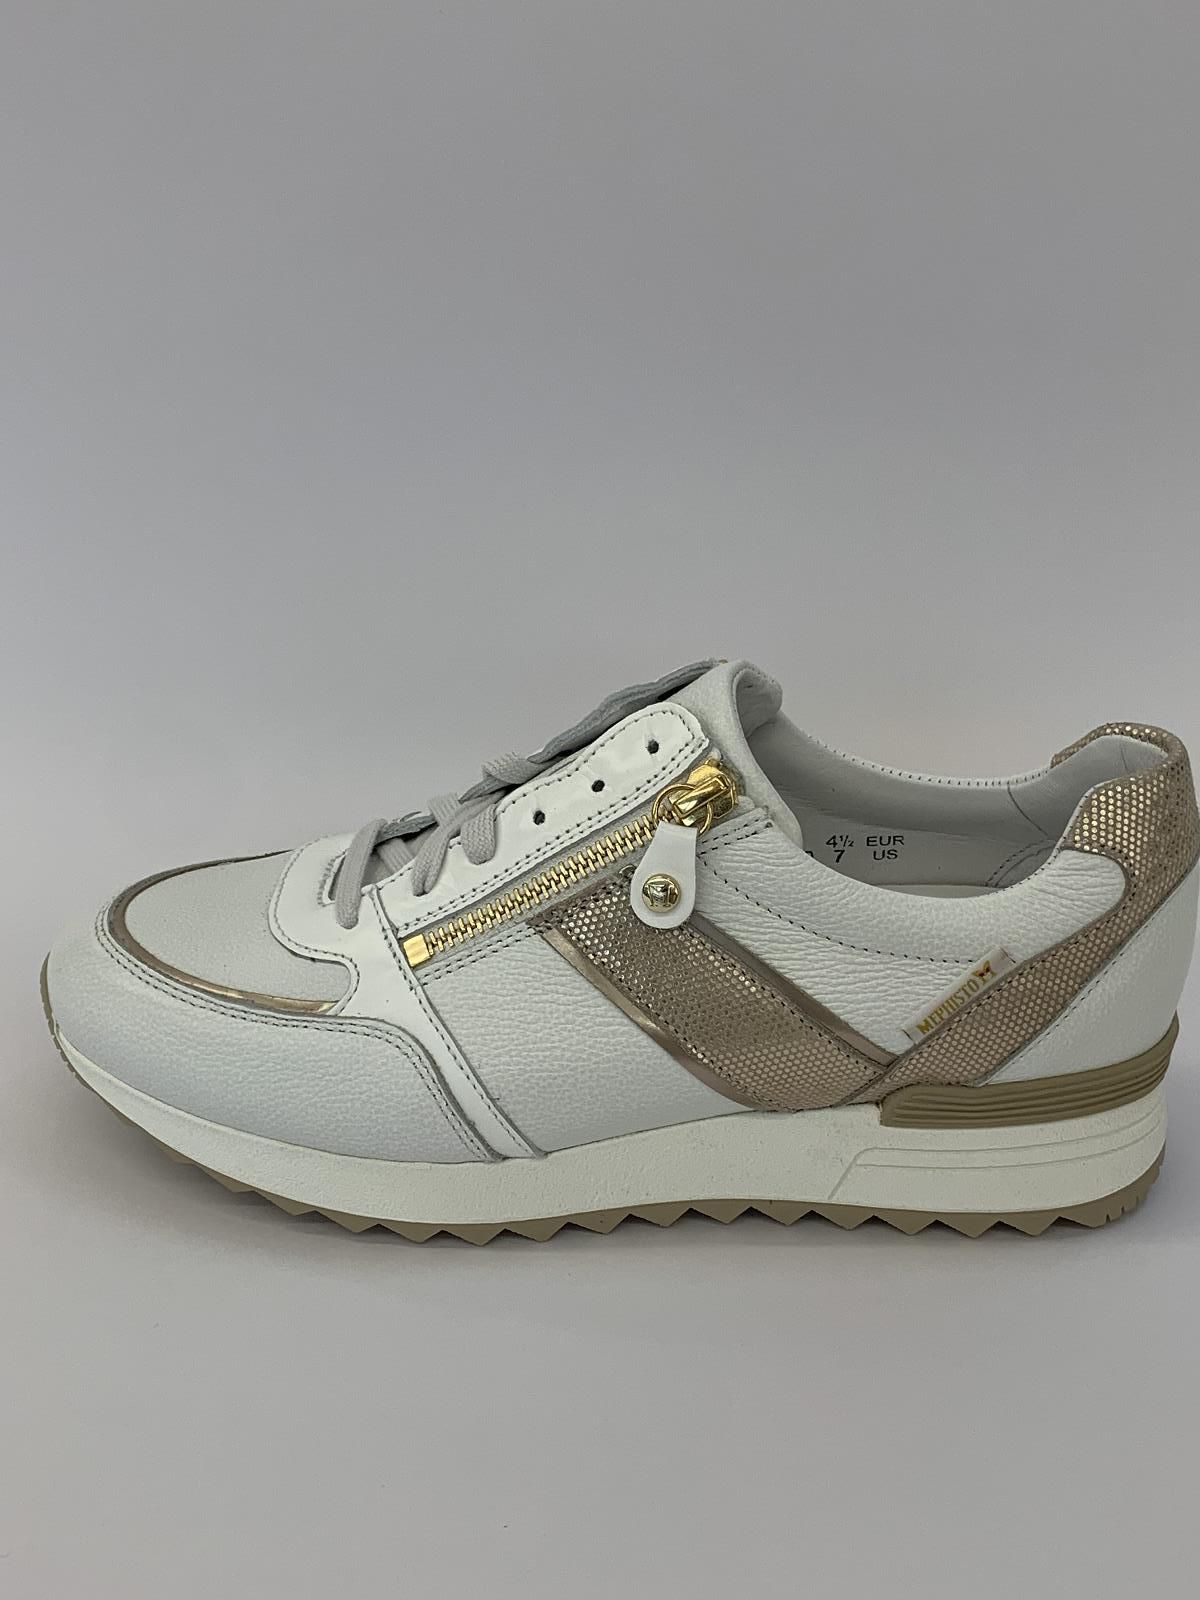 Mephisto Sneaker Wit+kleur dames (Runner Rits Wit - Toscana) - Schoenen Luca